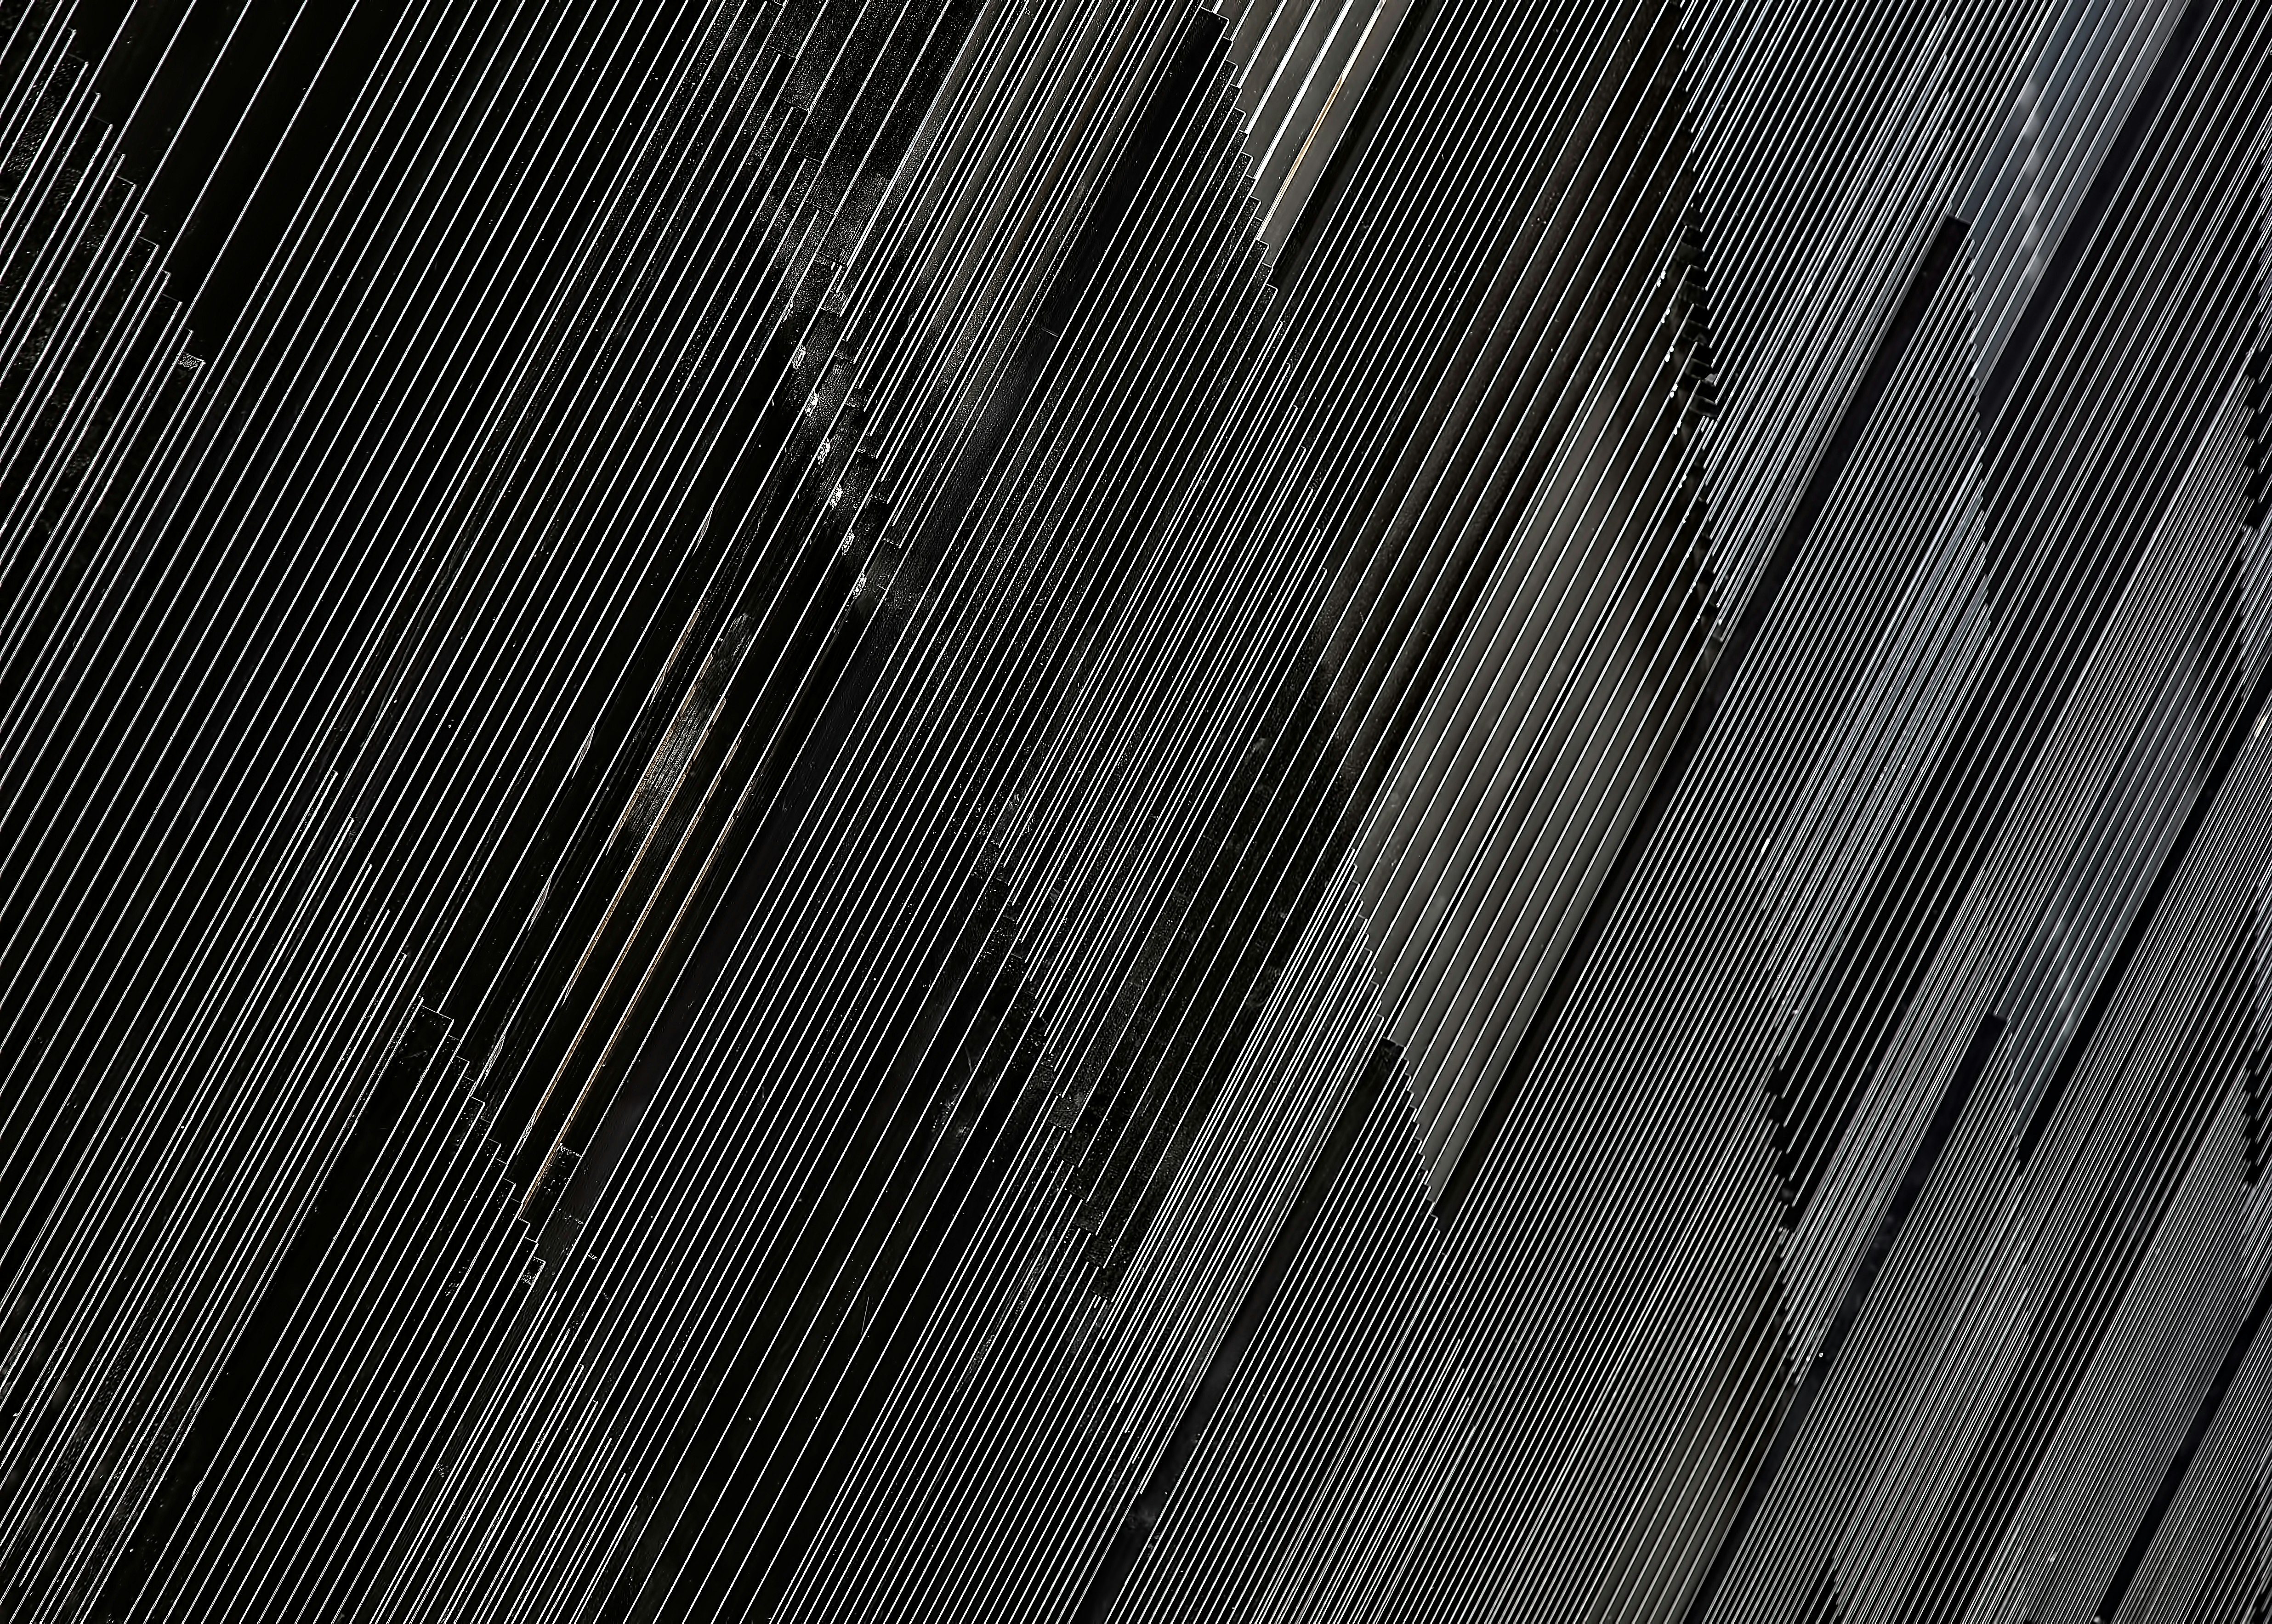 close-up photograph of black concrete wall